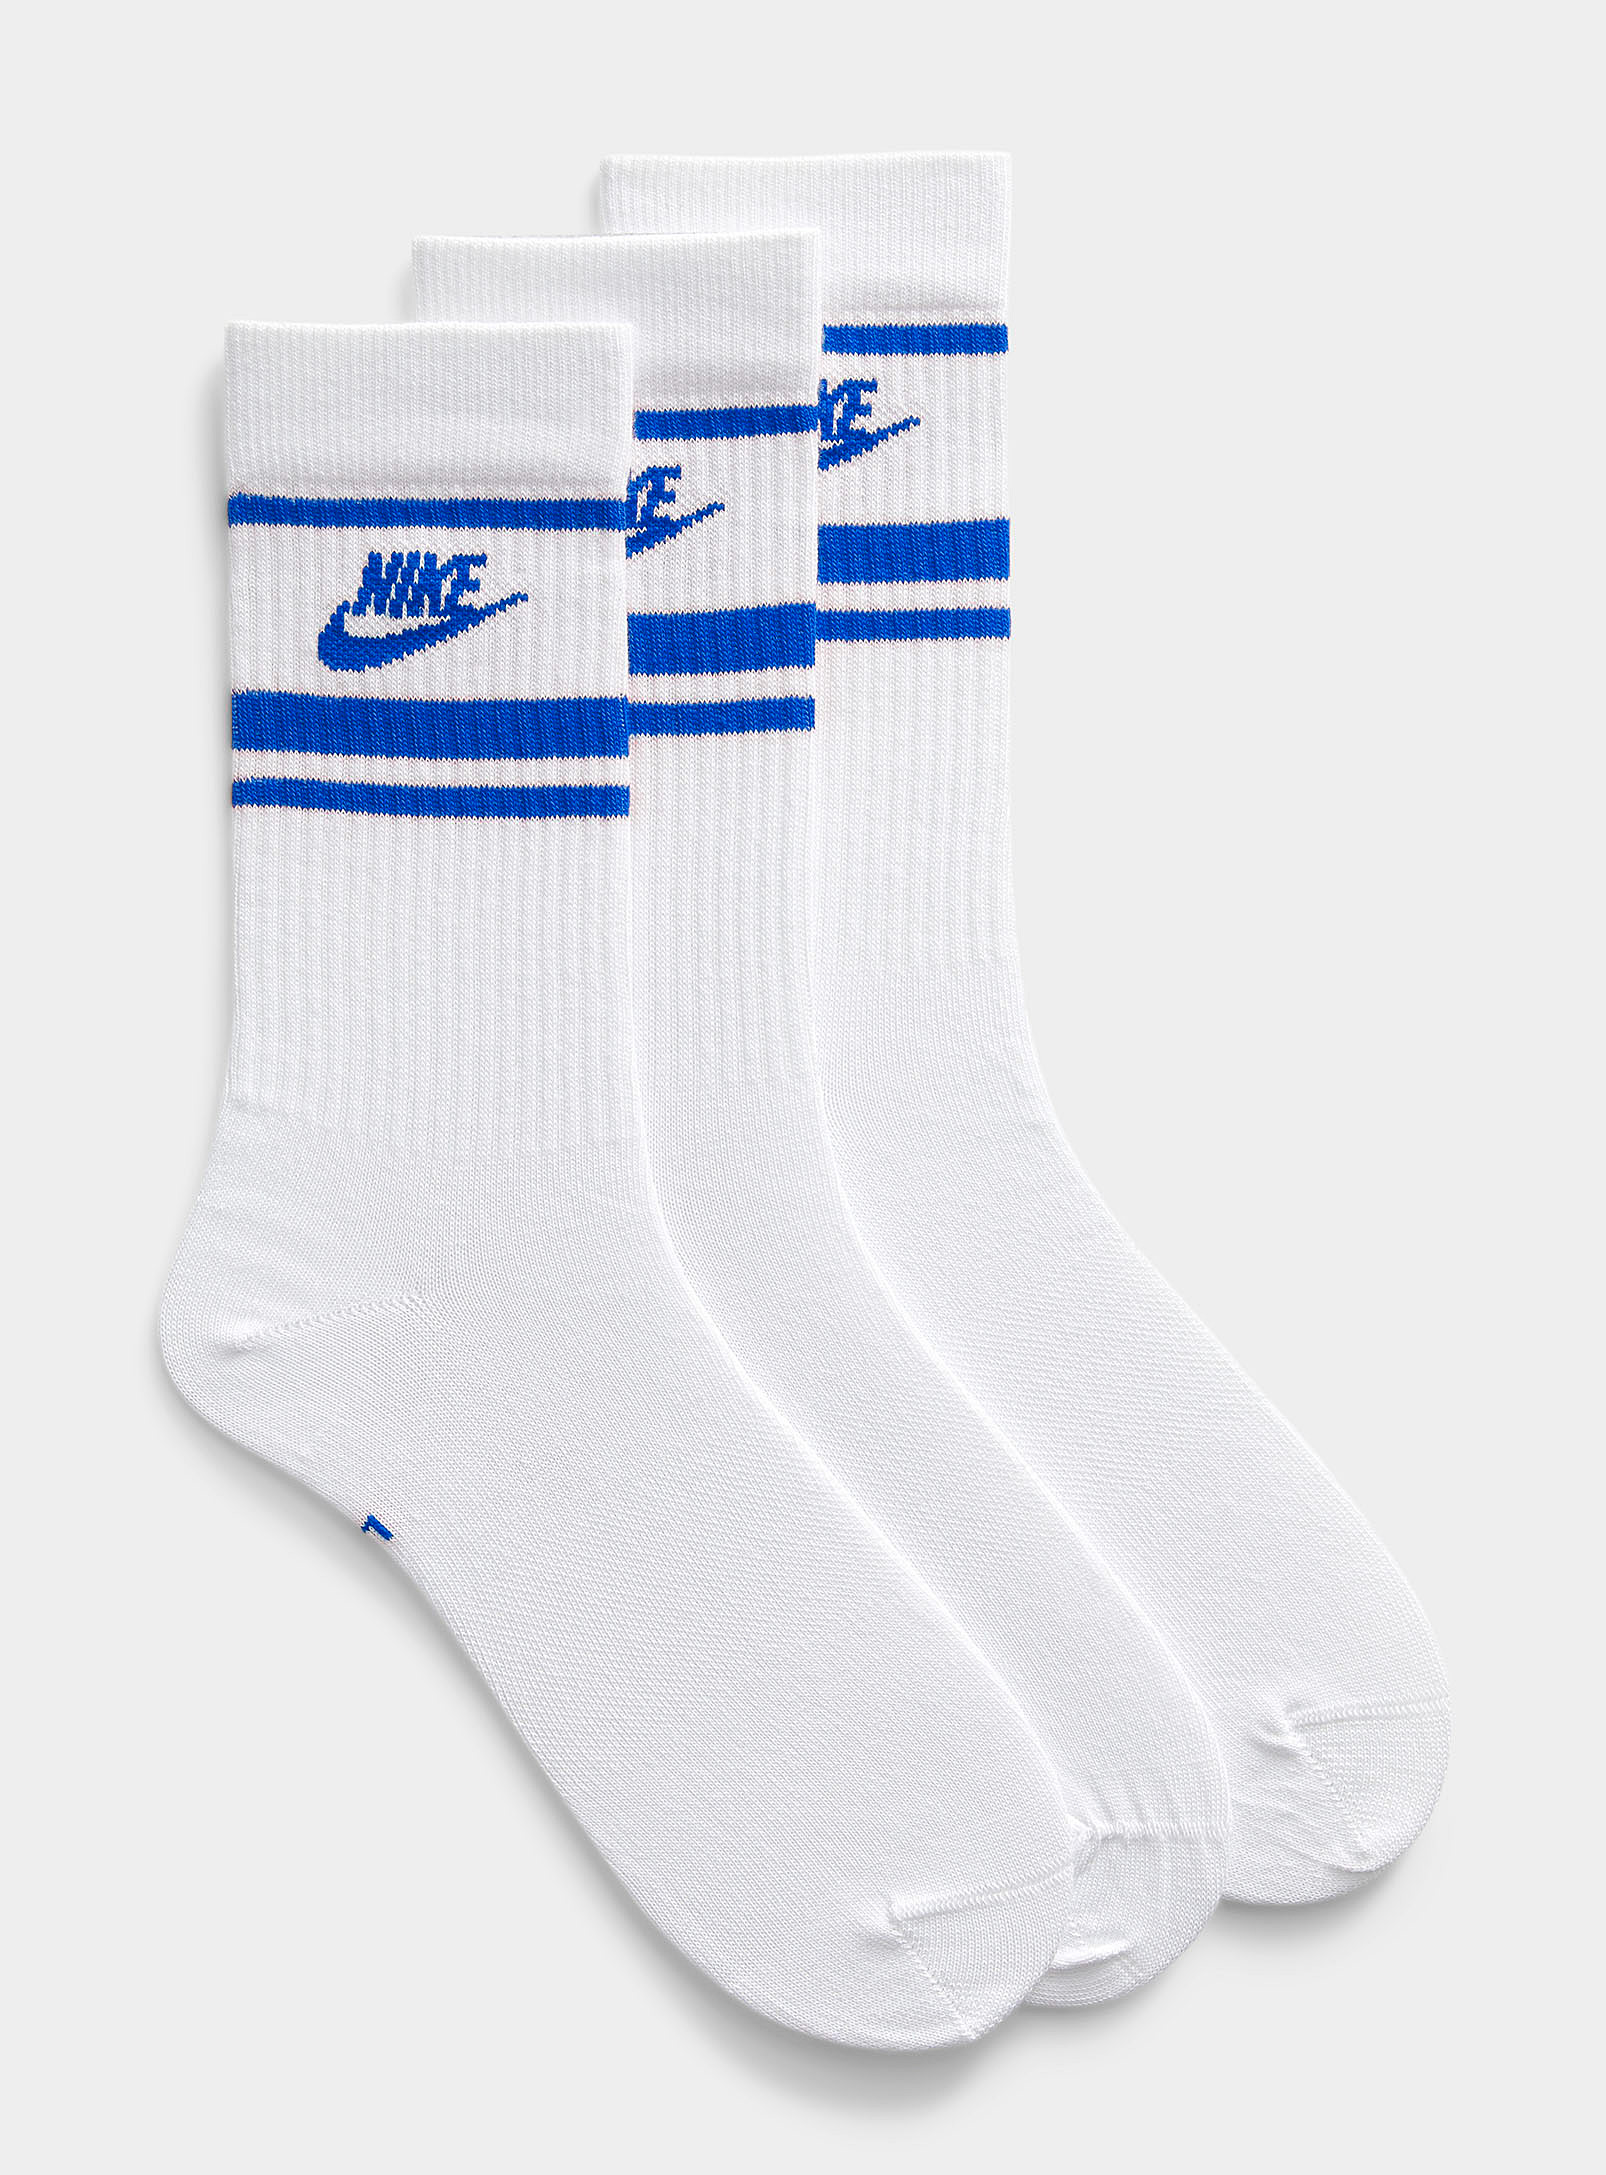 Nike Retro Athletic Socks 3-pack In Blue